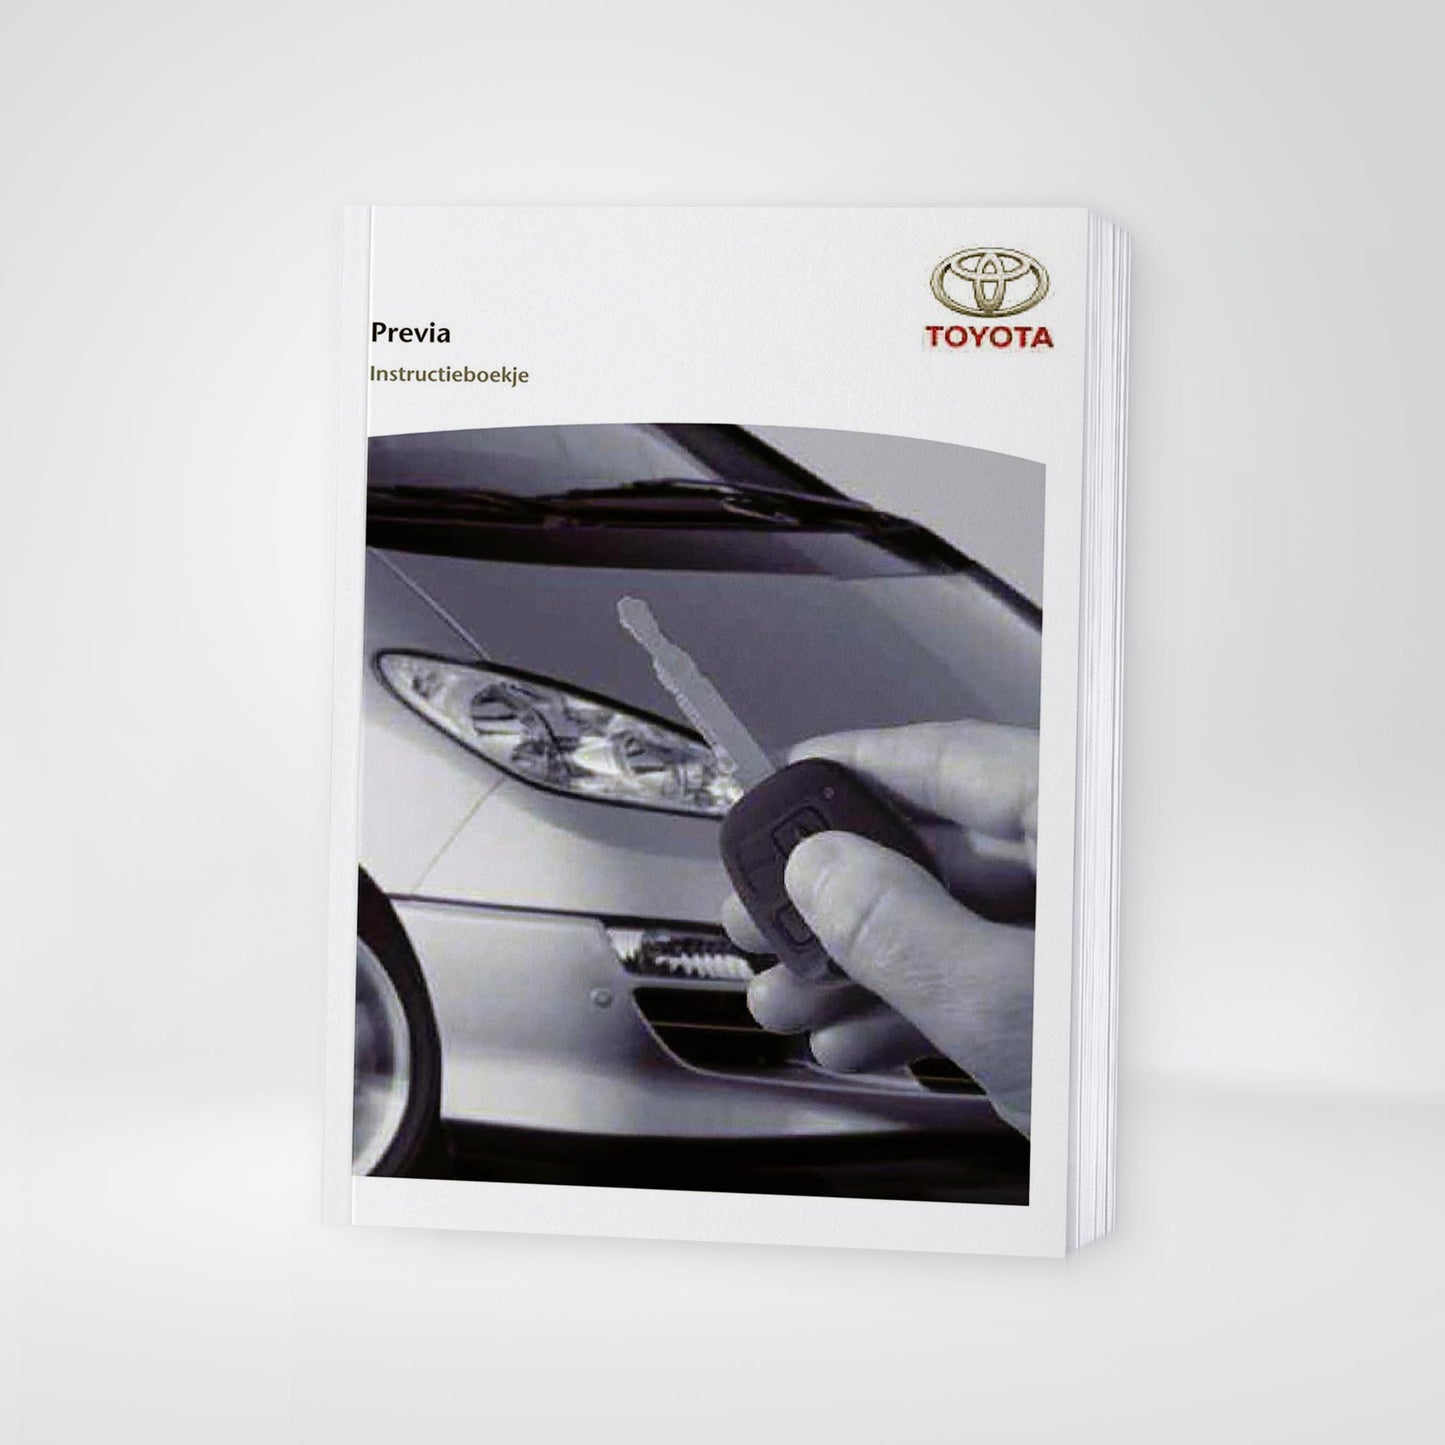 2003-2005 Toyota Previa Gebruikershandleiding | Nederlands